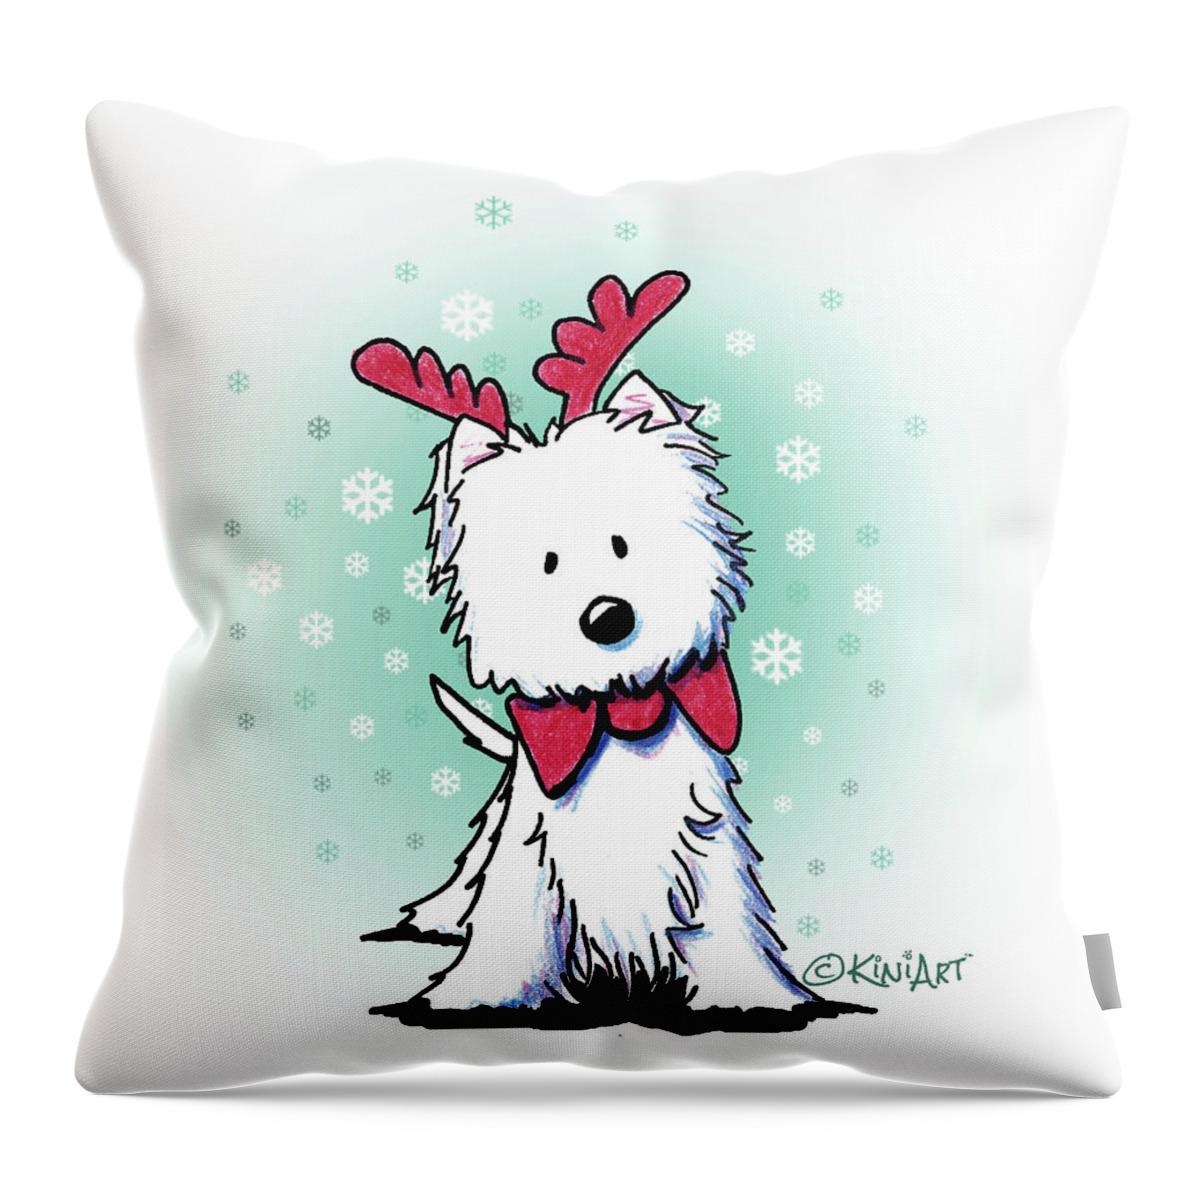 Westie Throw Pillow featuring the drawing KiniArt Westie Reindeer by Kim Niles aka KiniArt